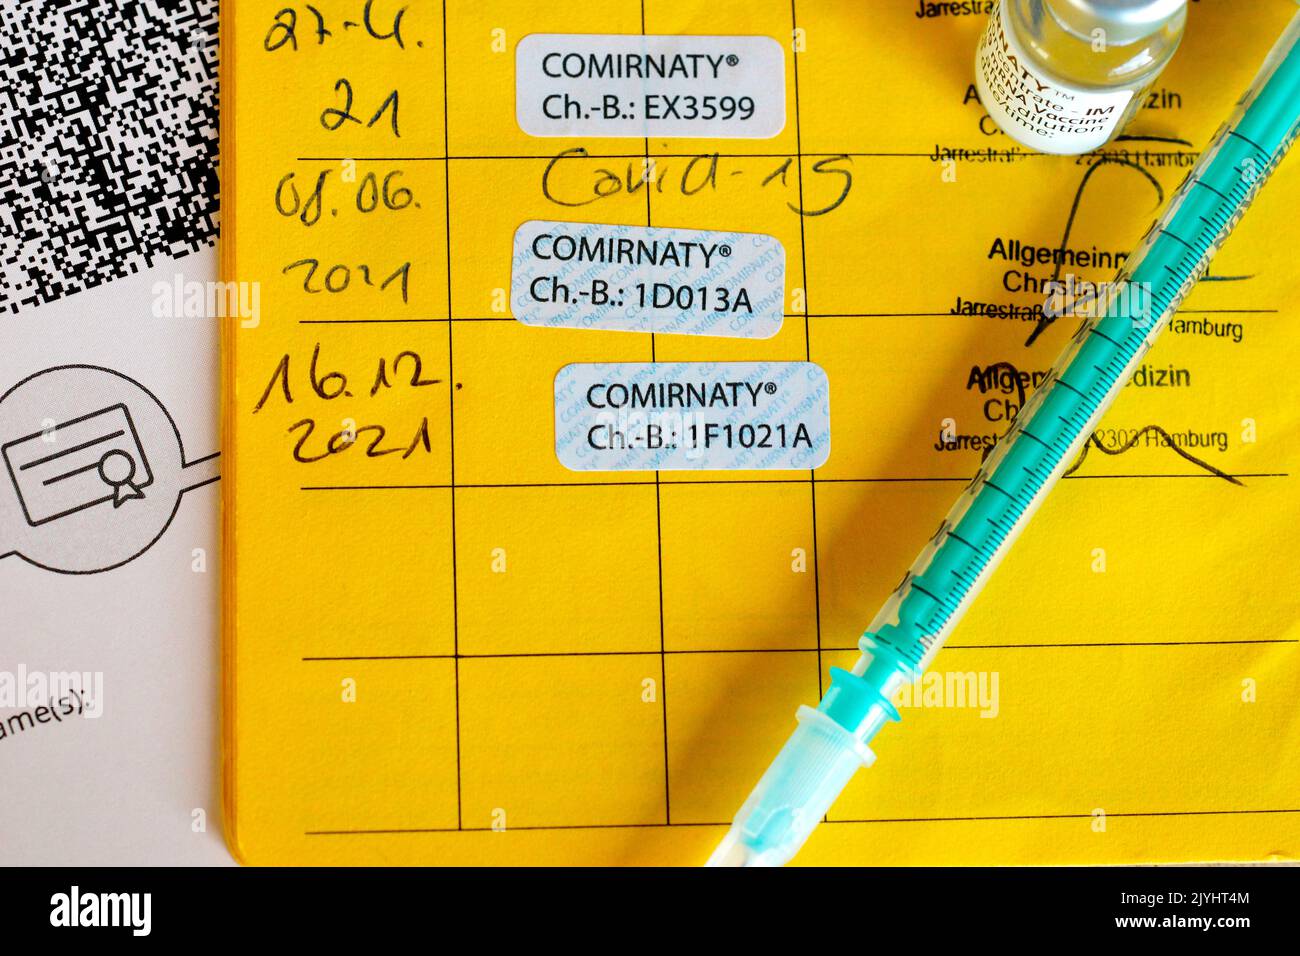 Enregistrement de doses avec des bâtonnets de vaccin Corona Comirnaty (Pfizer) Banque D'Images